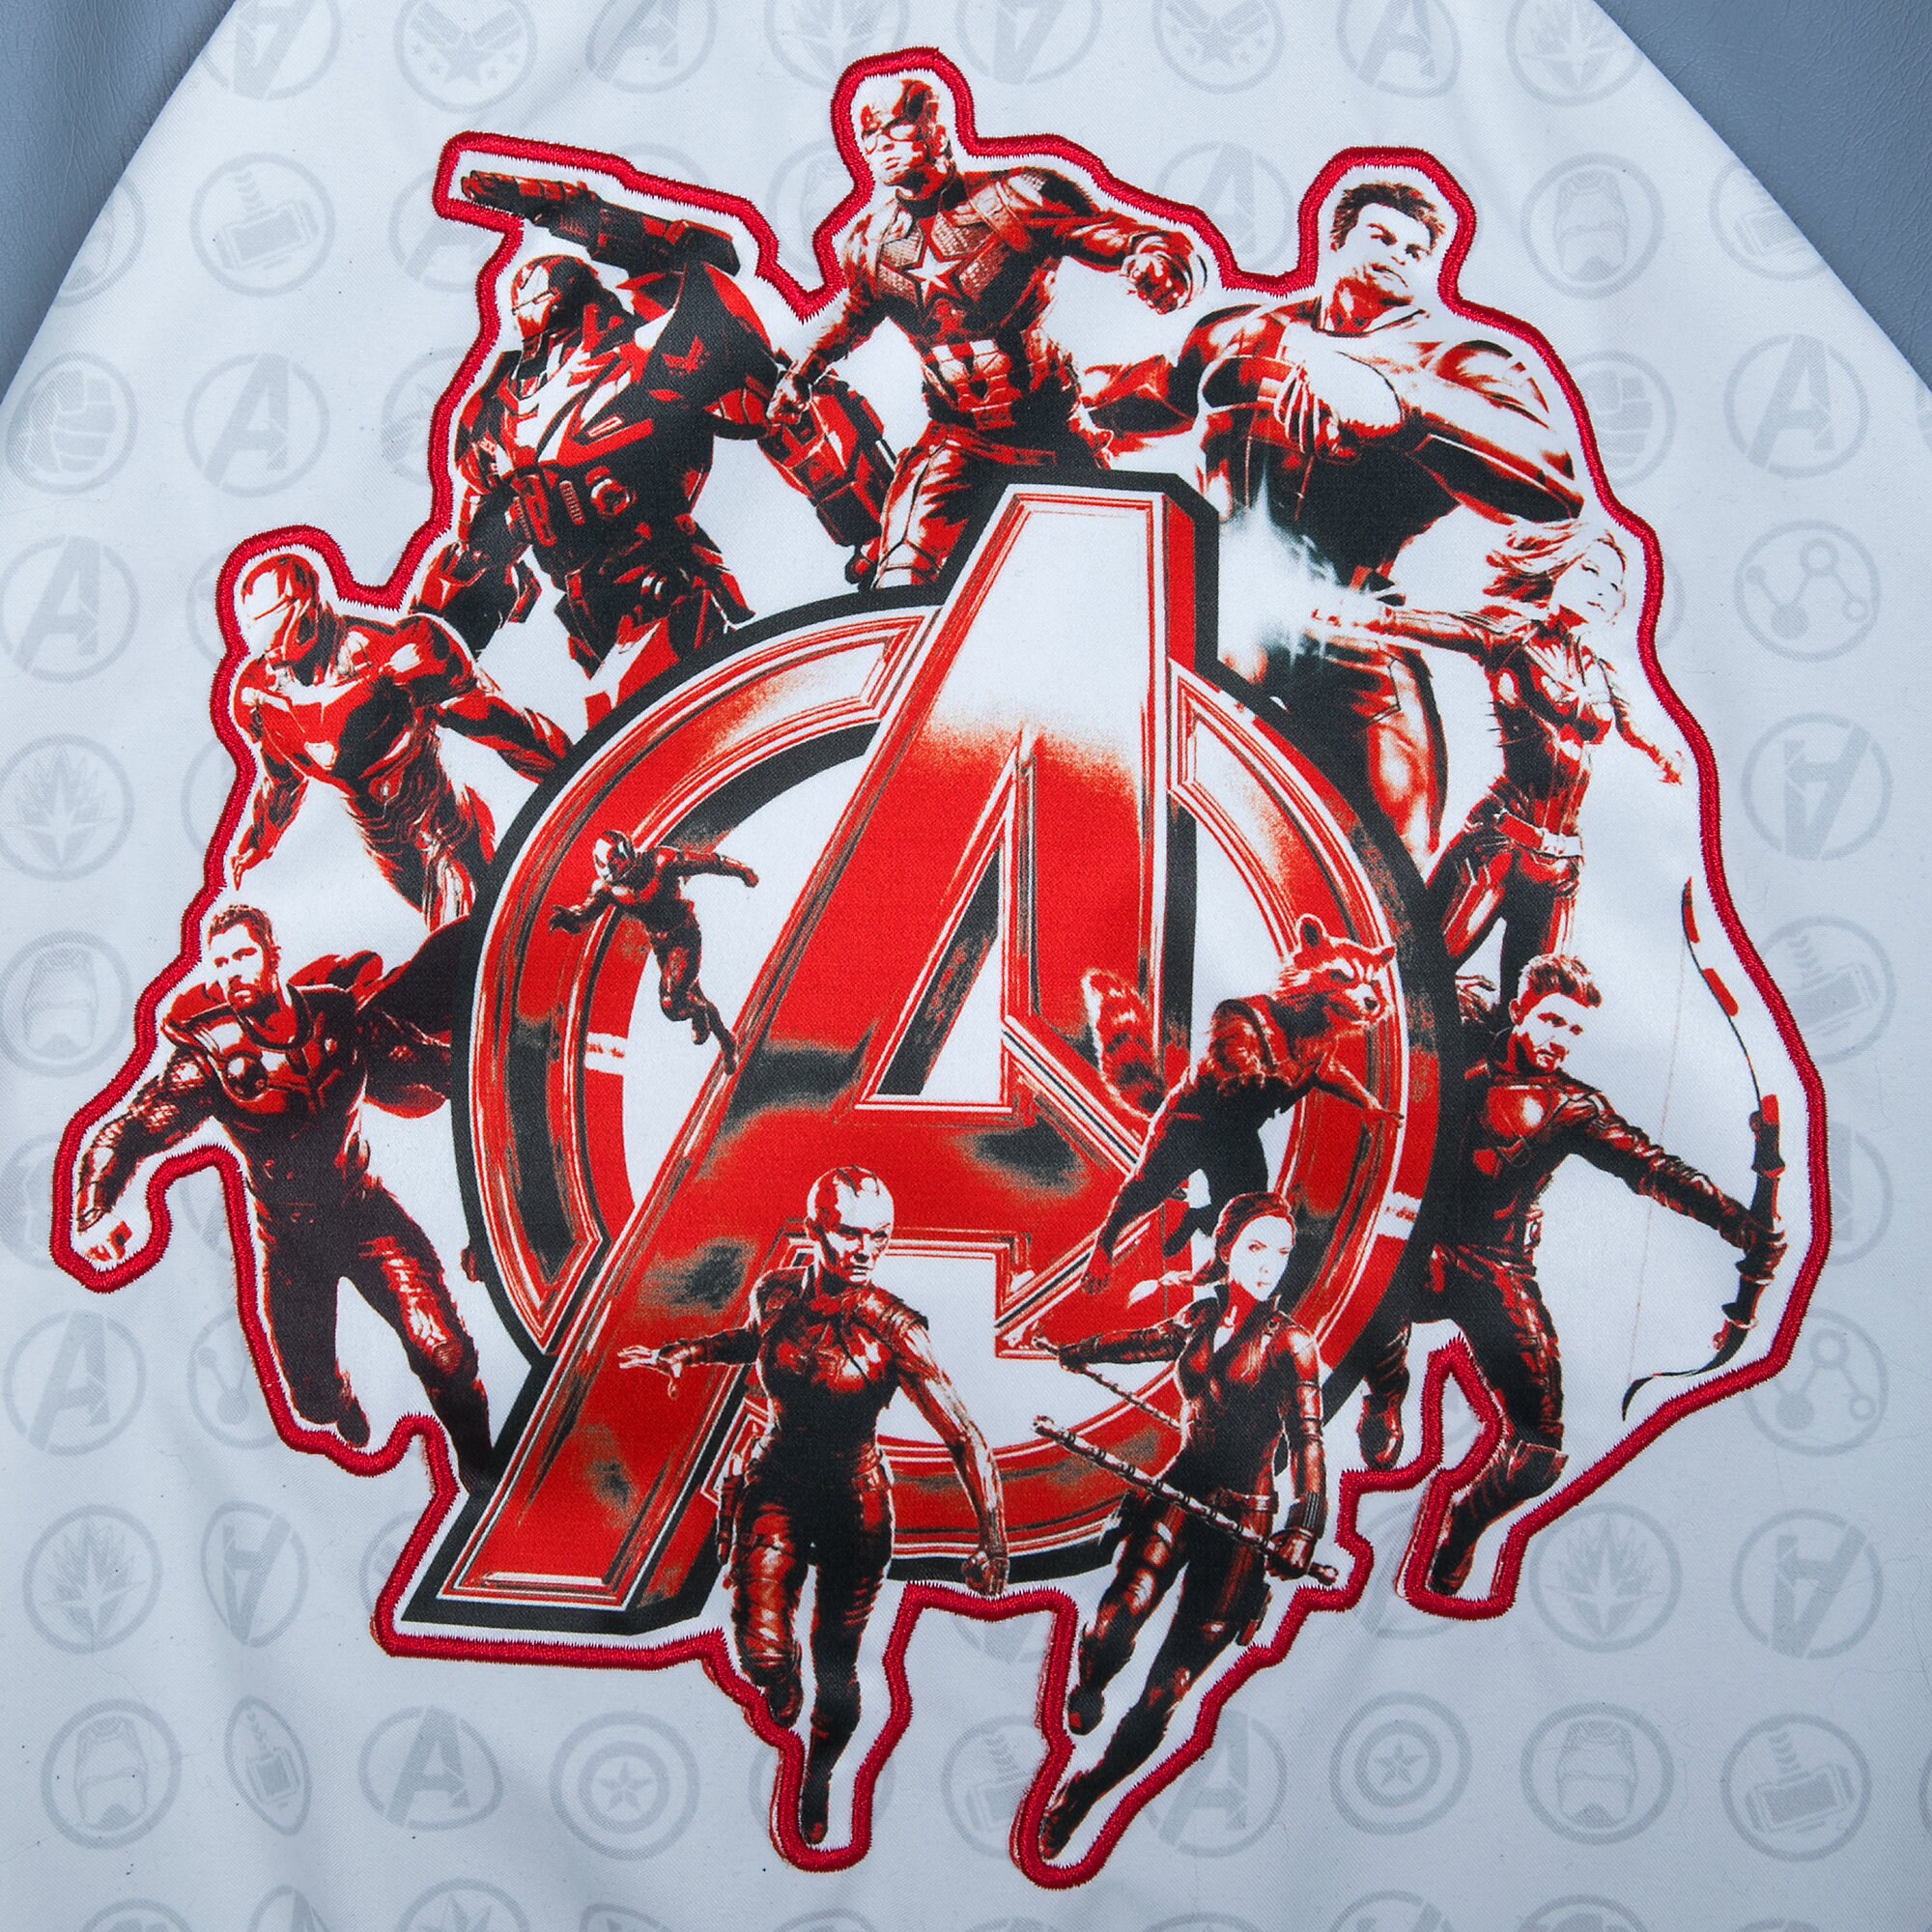 Marvel's Avengers Varsity Jacket for Boys - Personalized